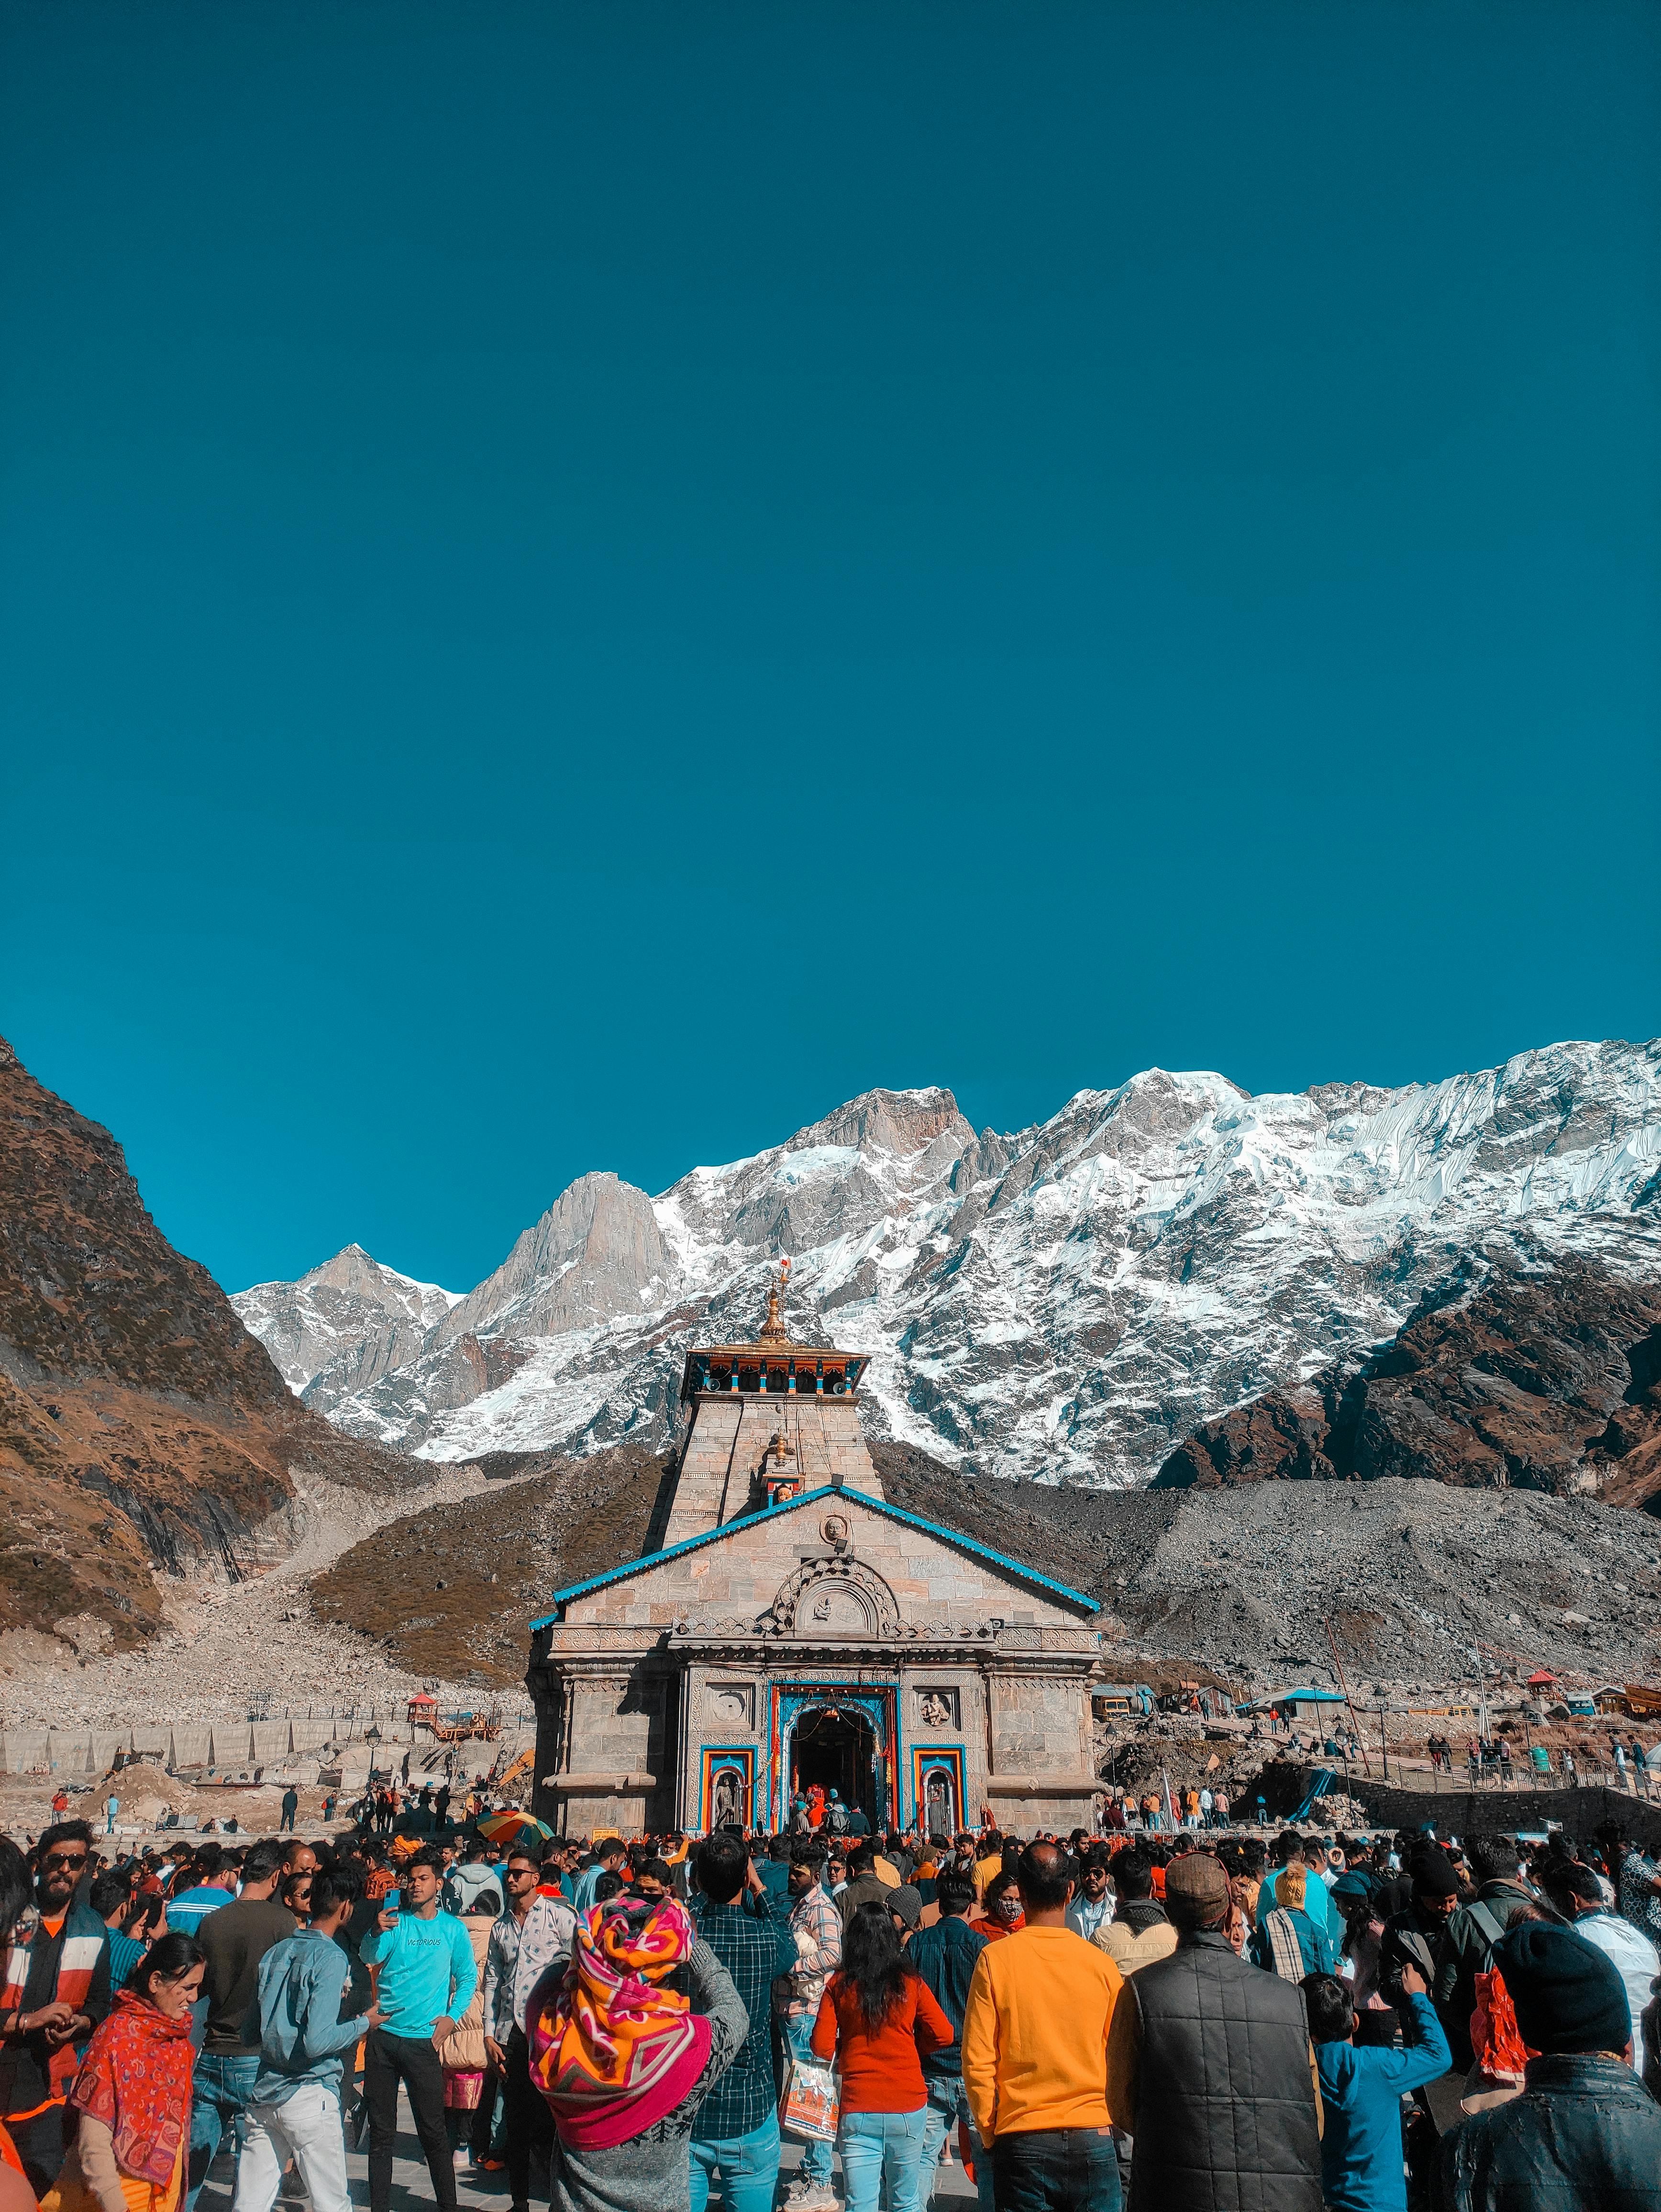 Monochrome Shot of Lingaraj Temple · Free Stock Photo